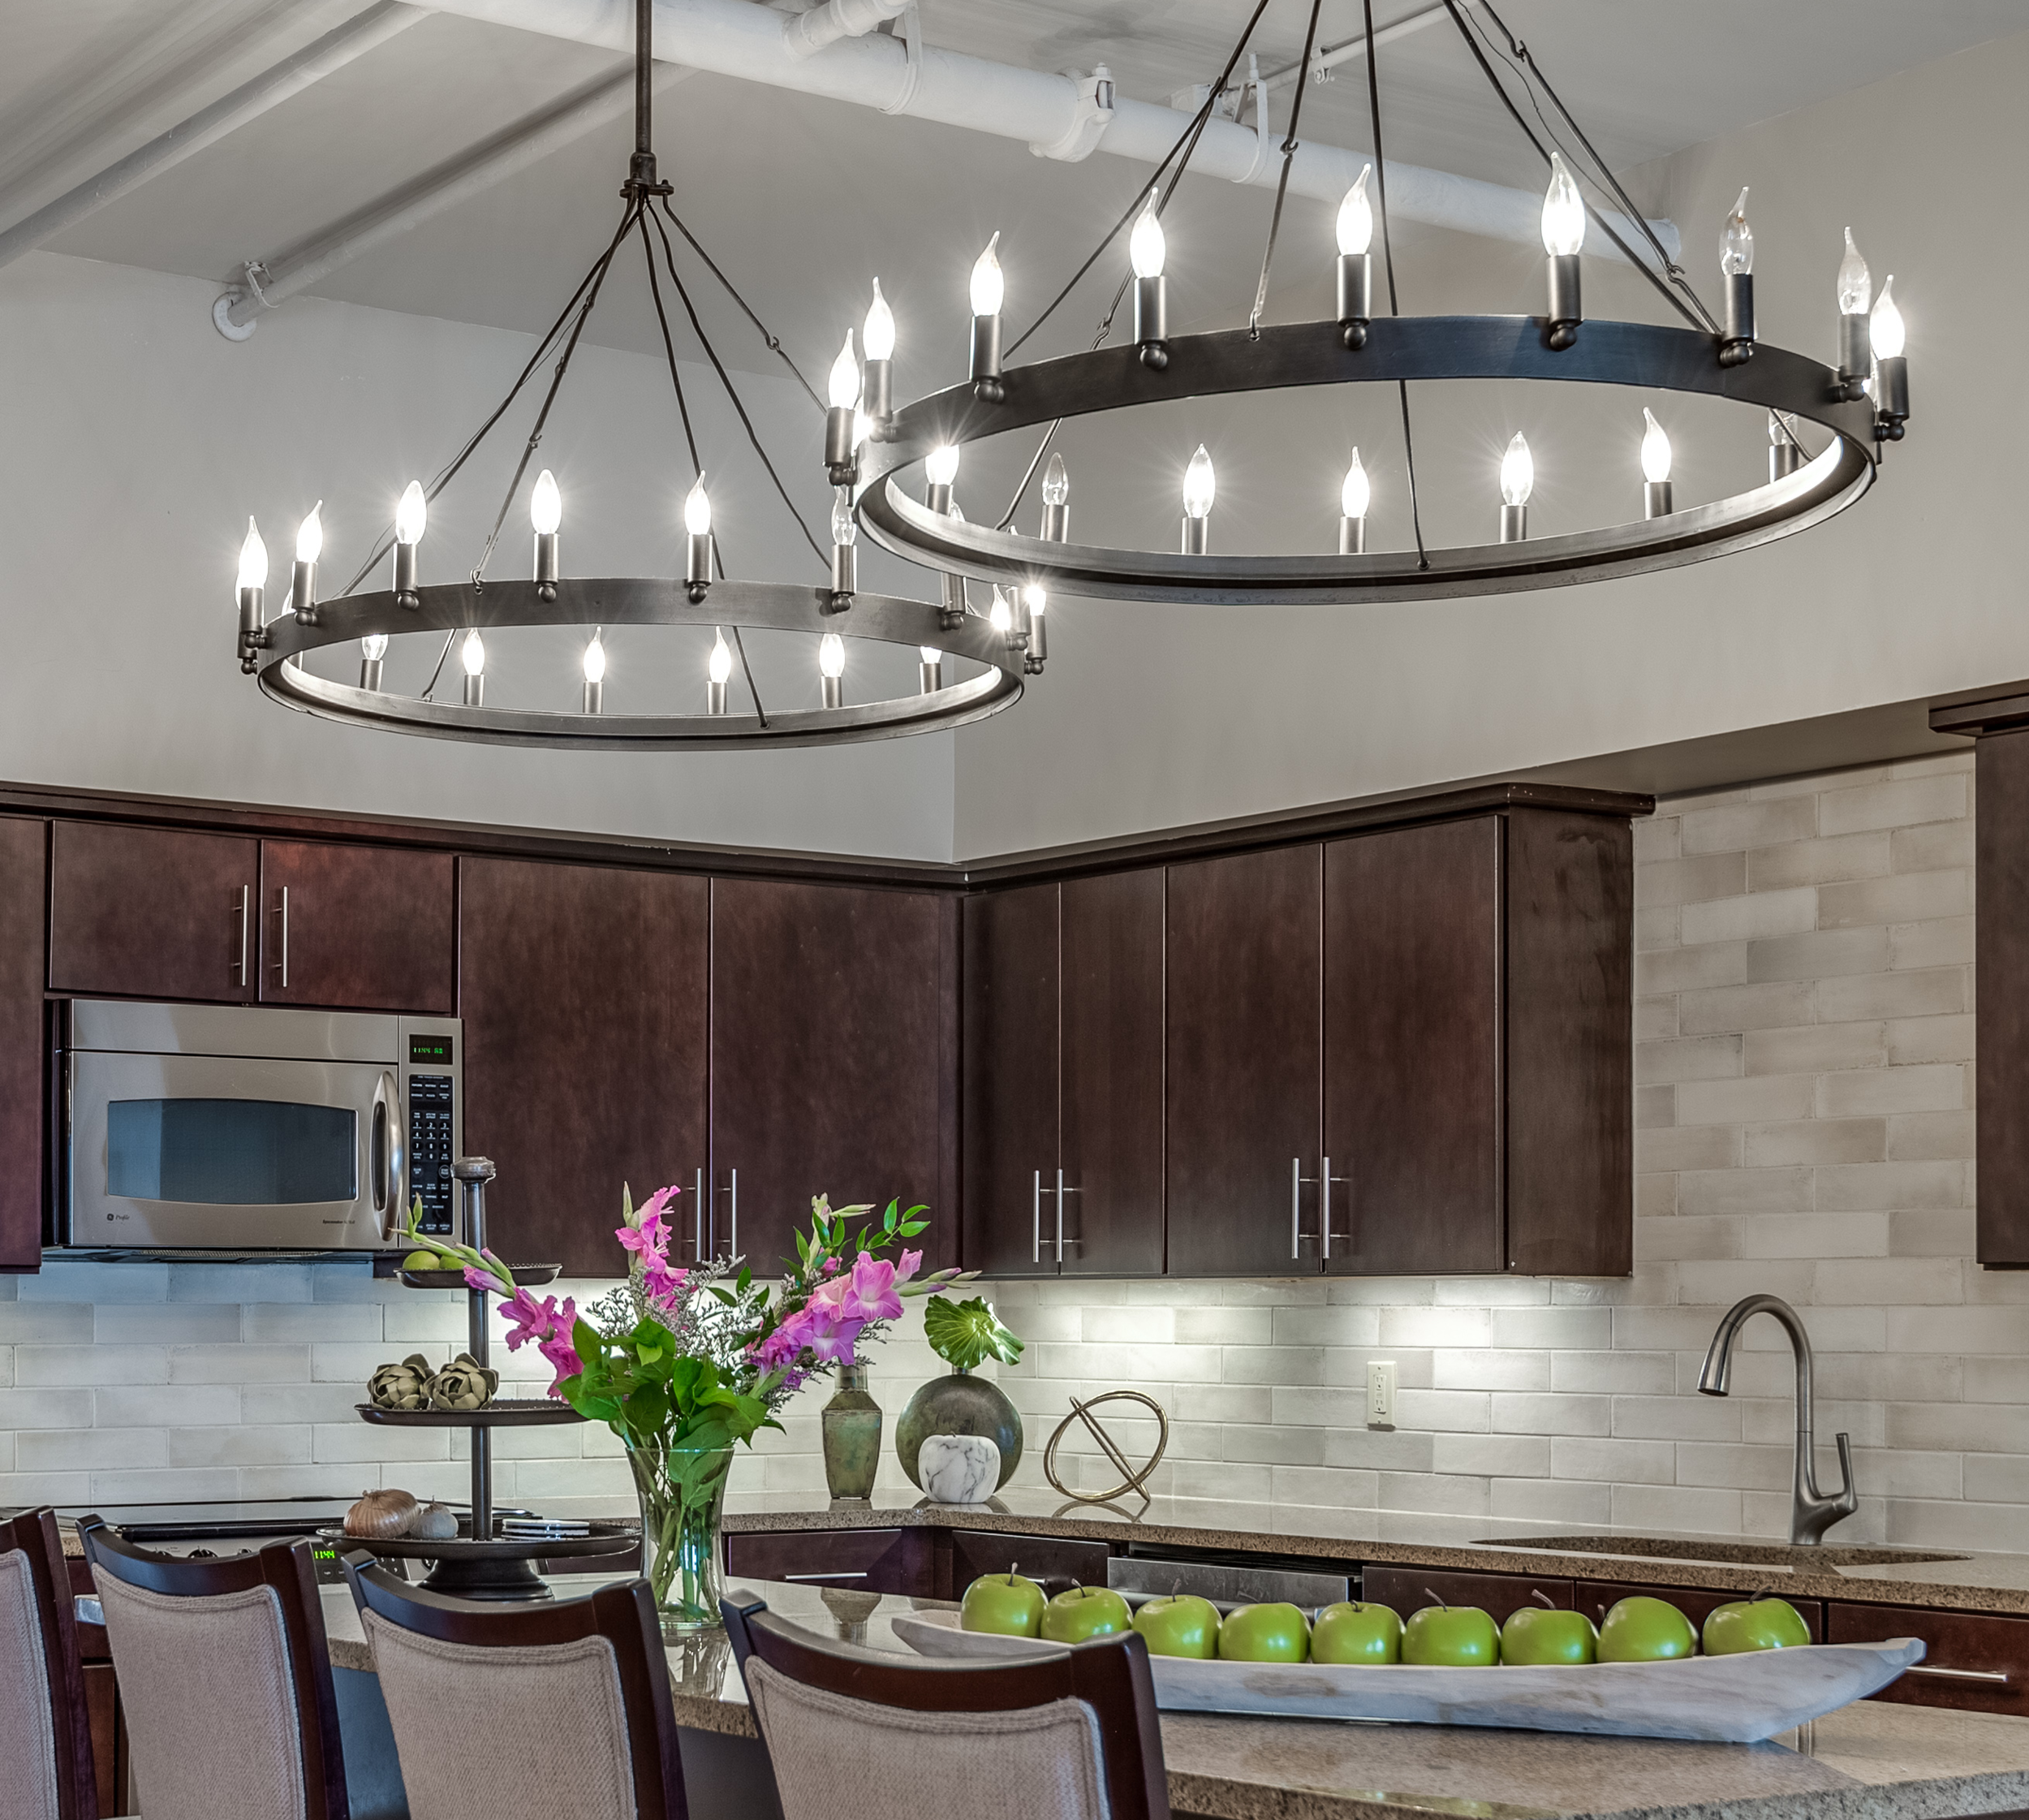 kitchen chandelier lighting ideas metairie uptown local interiors designers khb interiors